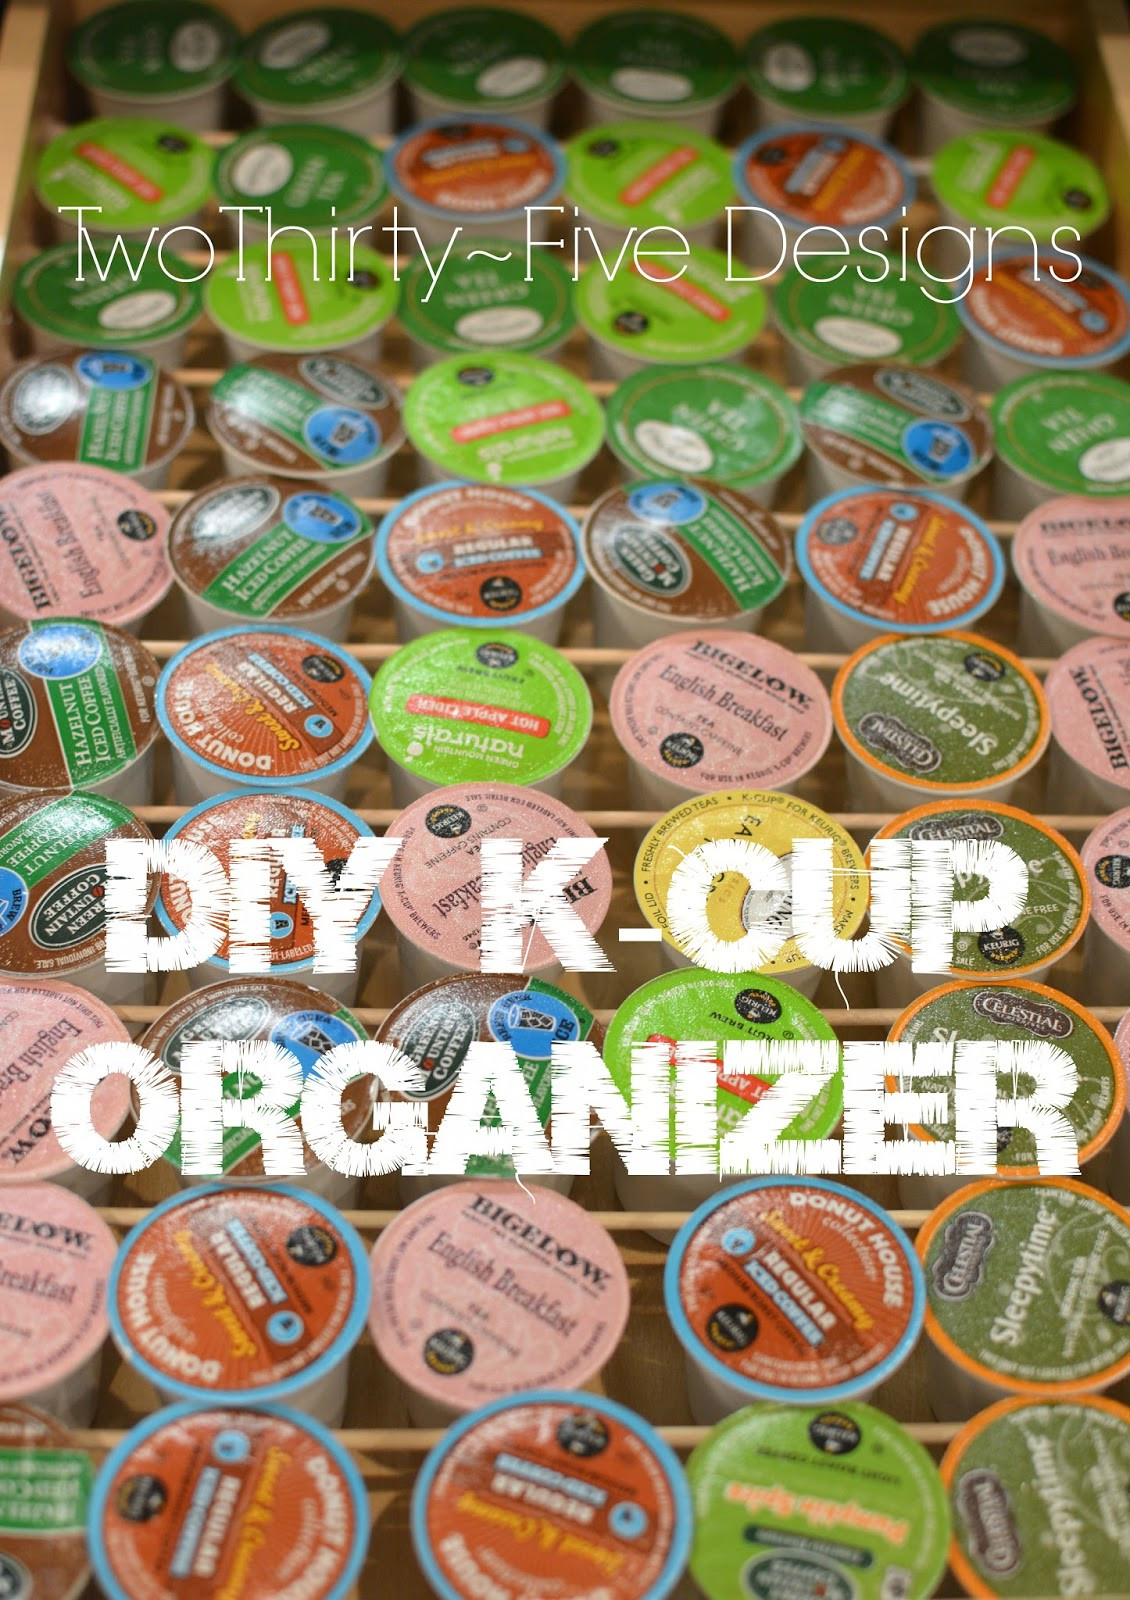 K Cup Organizer DIY
 $2 DIY K Cup Organizer Two Thirty Five Designs